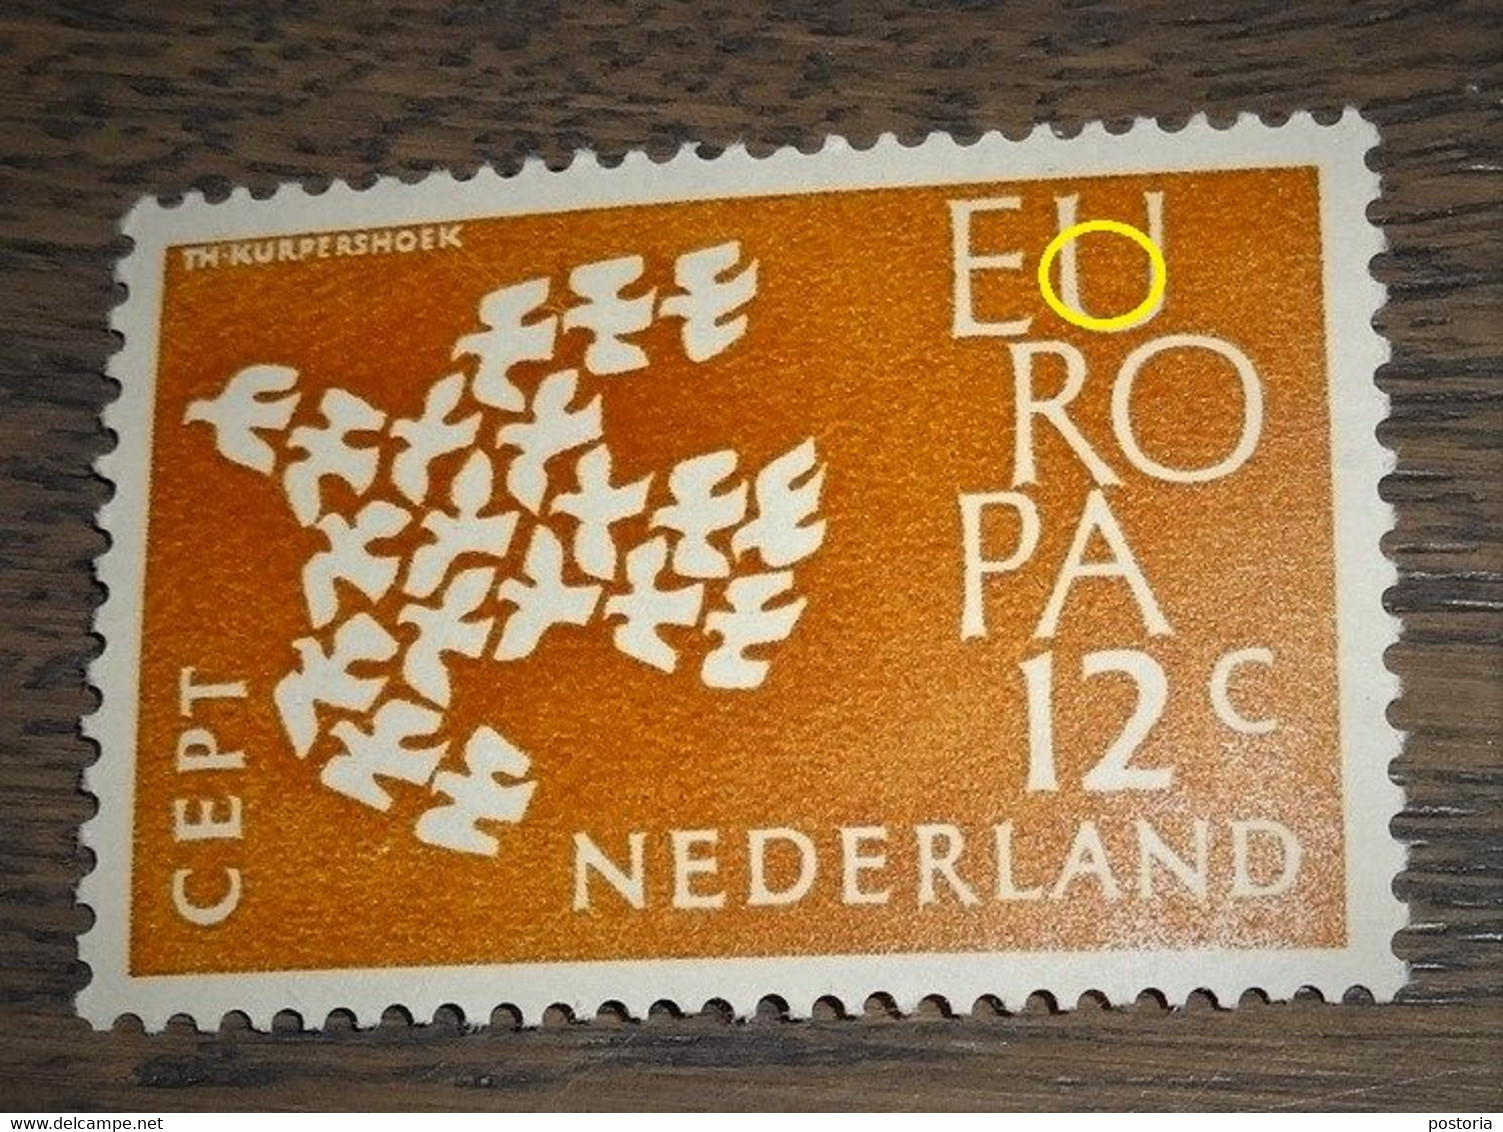 Nederland - MAST - 757 PM1 - 1961 - Plaatfout - Postfris - Vlek In U Van EU - Variétés Et Curiosités